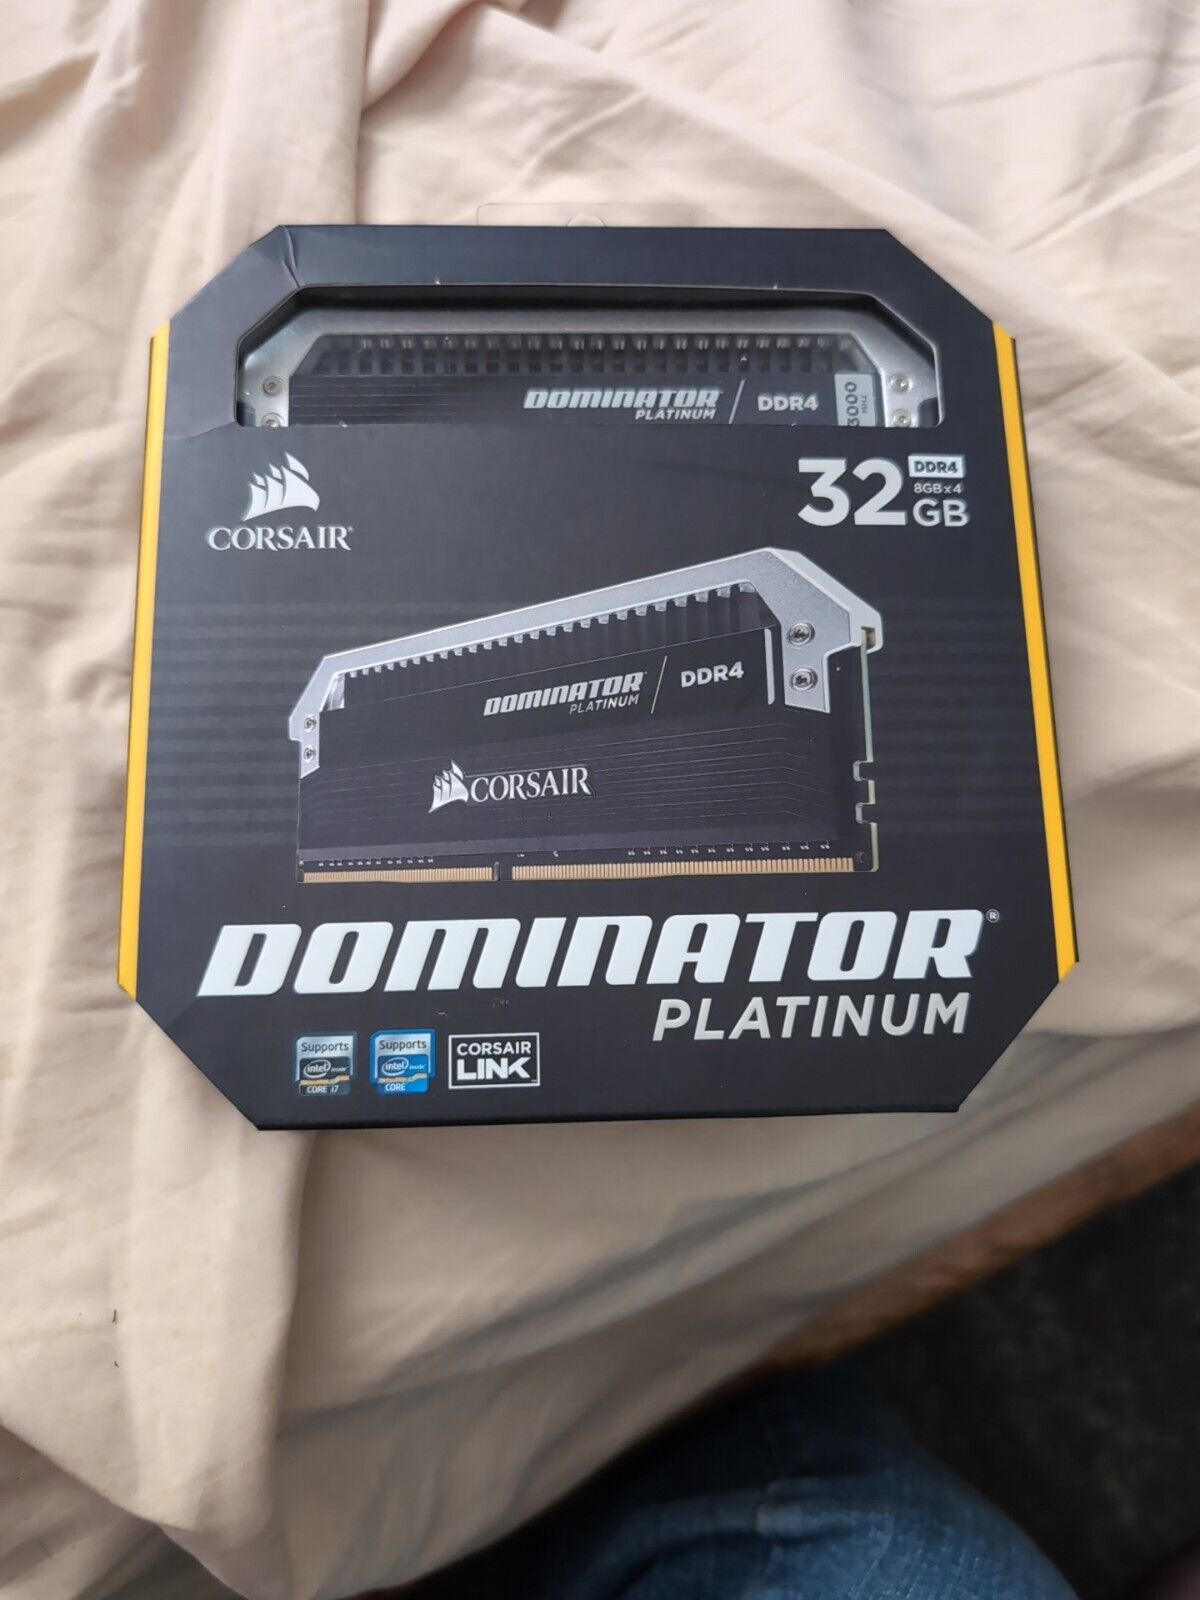 Corsair Dominator Platinum 32GB (4x8GB) Desktop DDR4 Kit CMD32GX4M4C3000C15